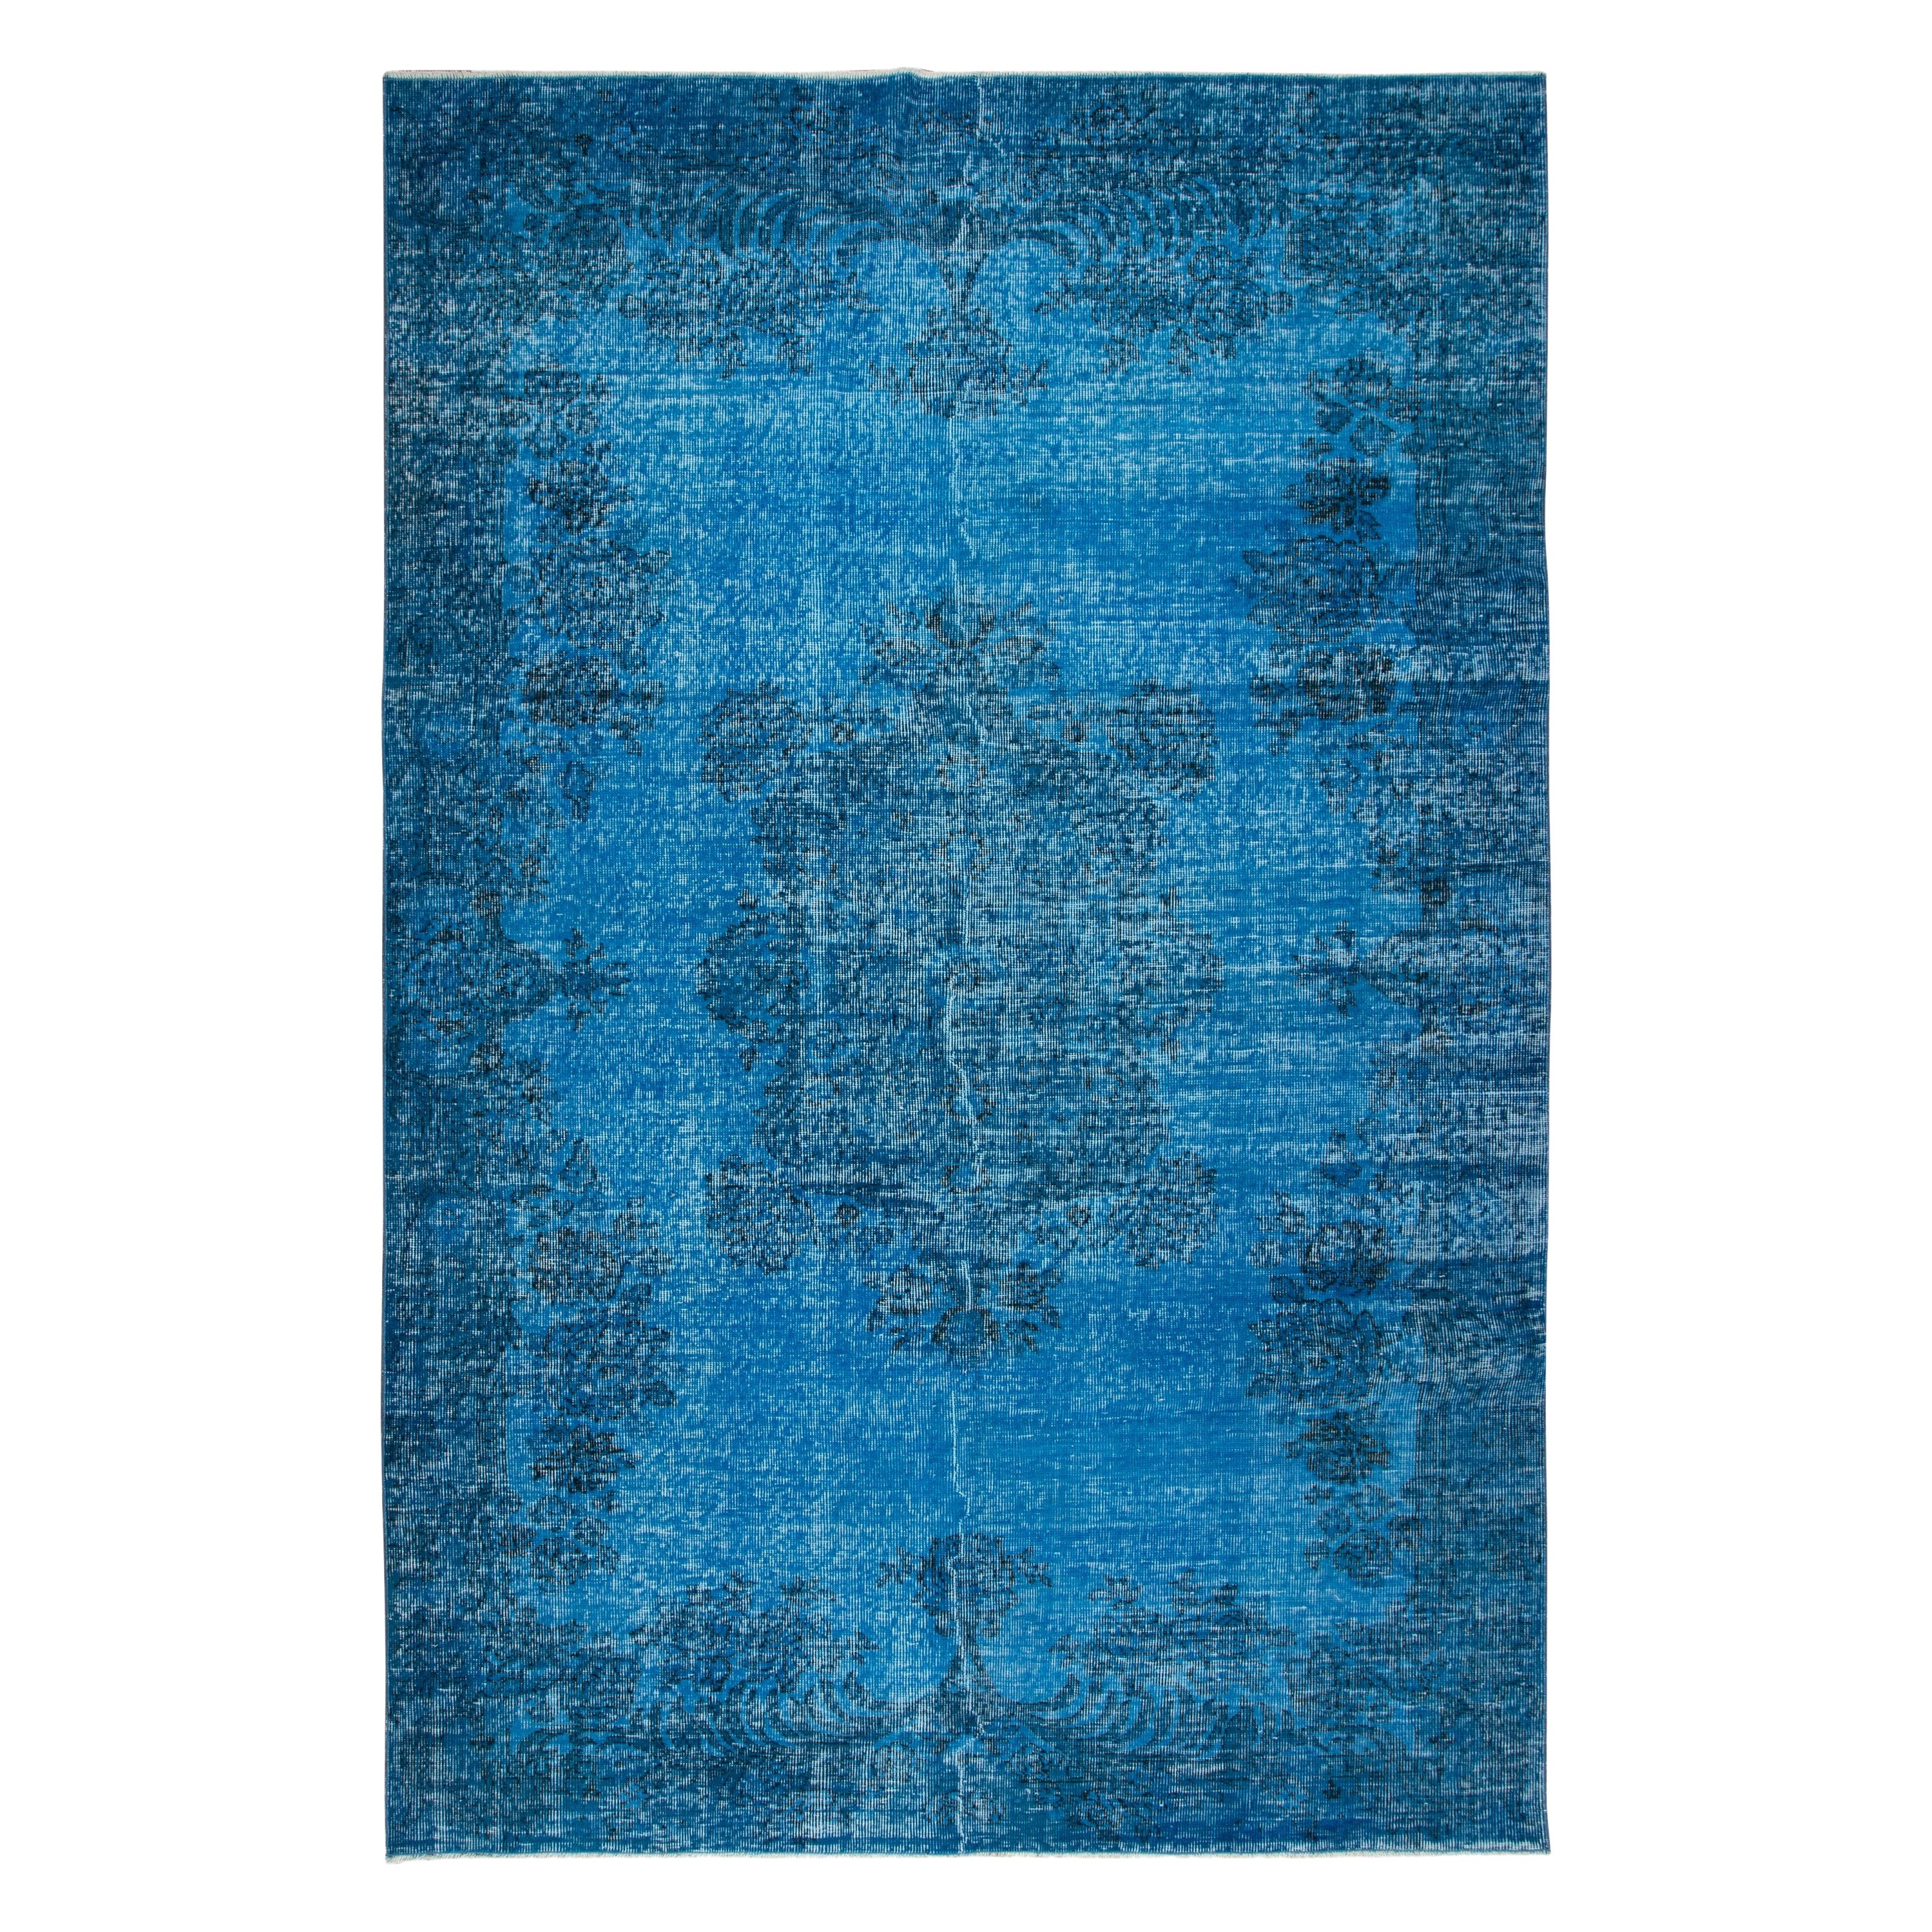 6x9 Ft Ocean Blue Handmade Turkish Rug for Living Room, Bedroom, Dining Room For Sale